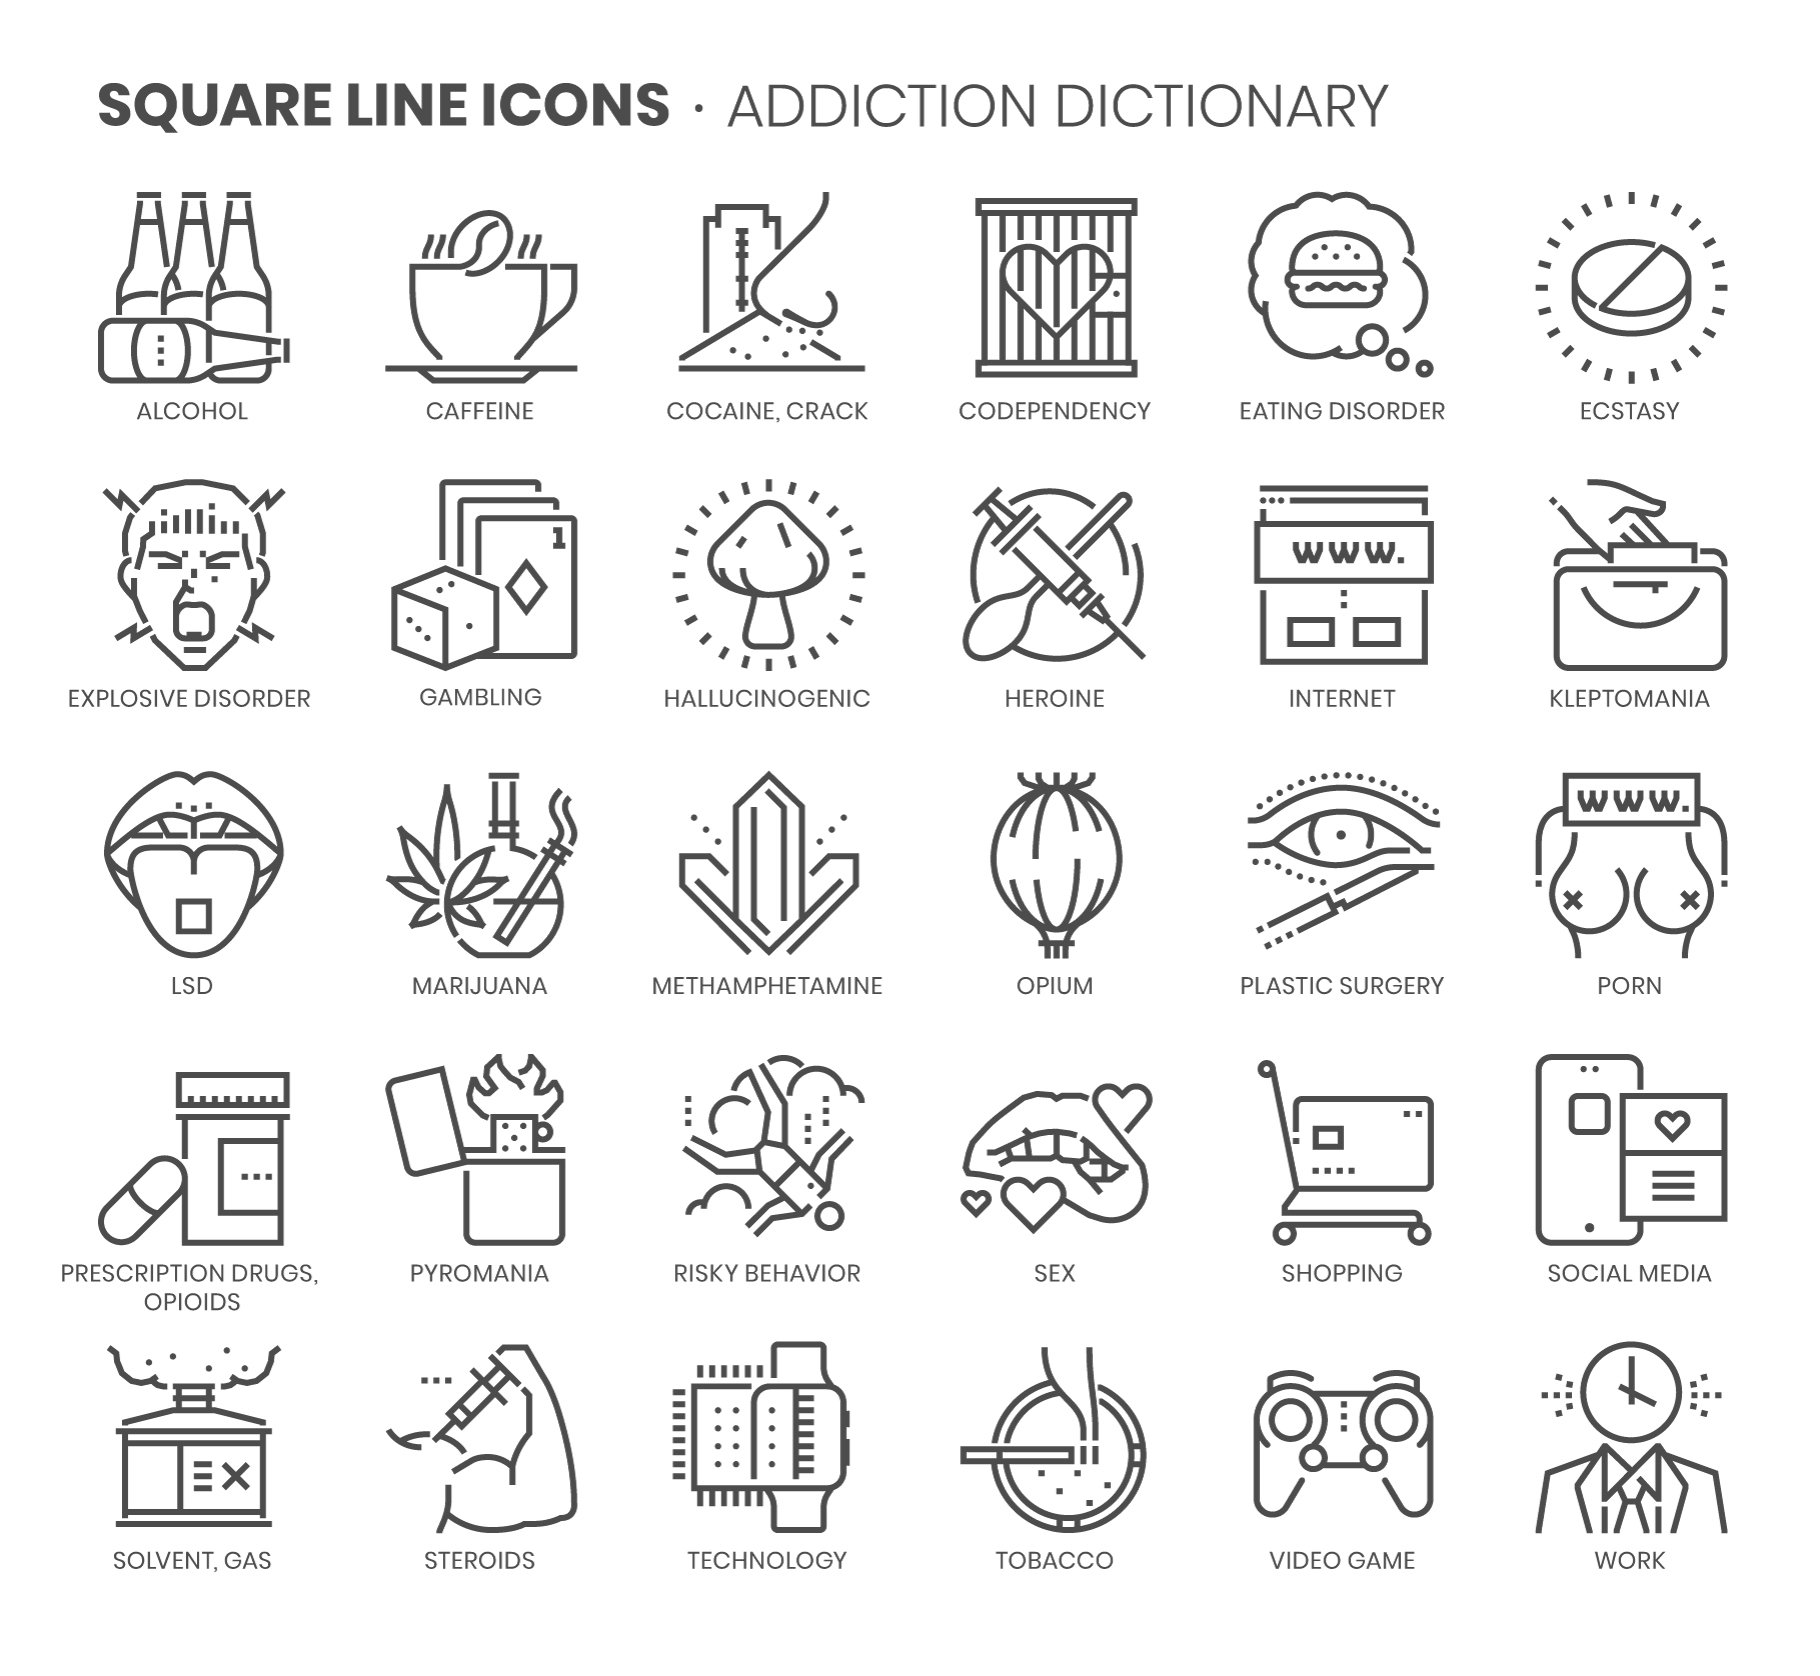 sq63 addiction dictionary 233